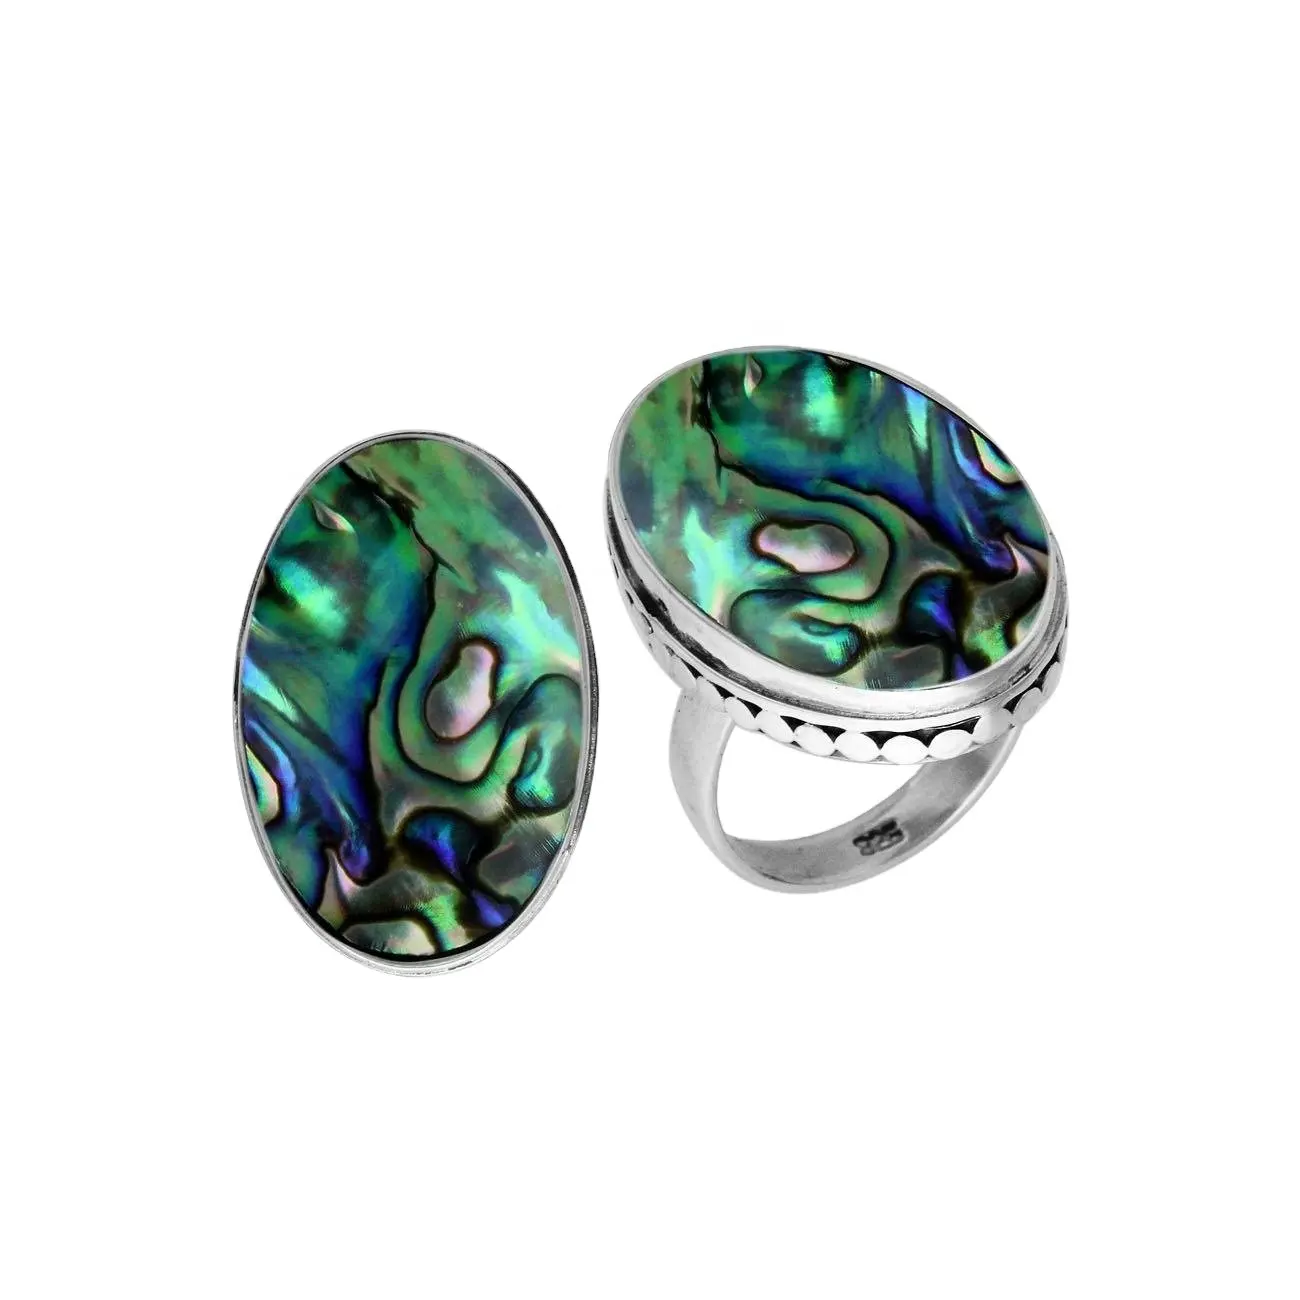 Designer custom jewelry 925 sterling silver abalone shell rings